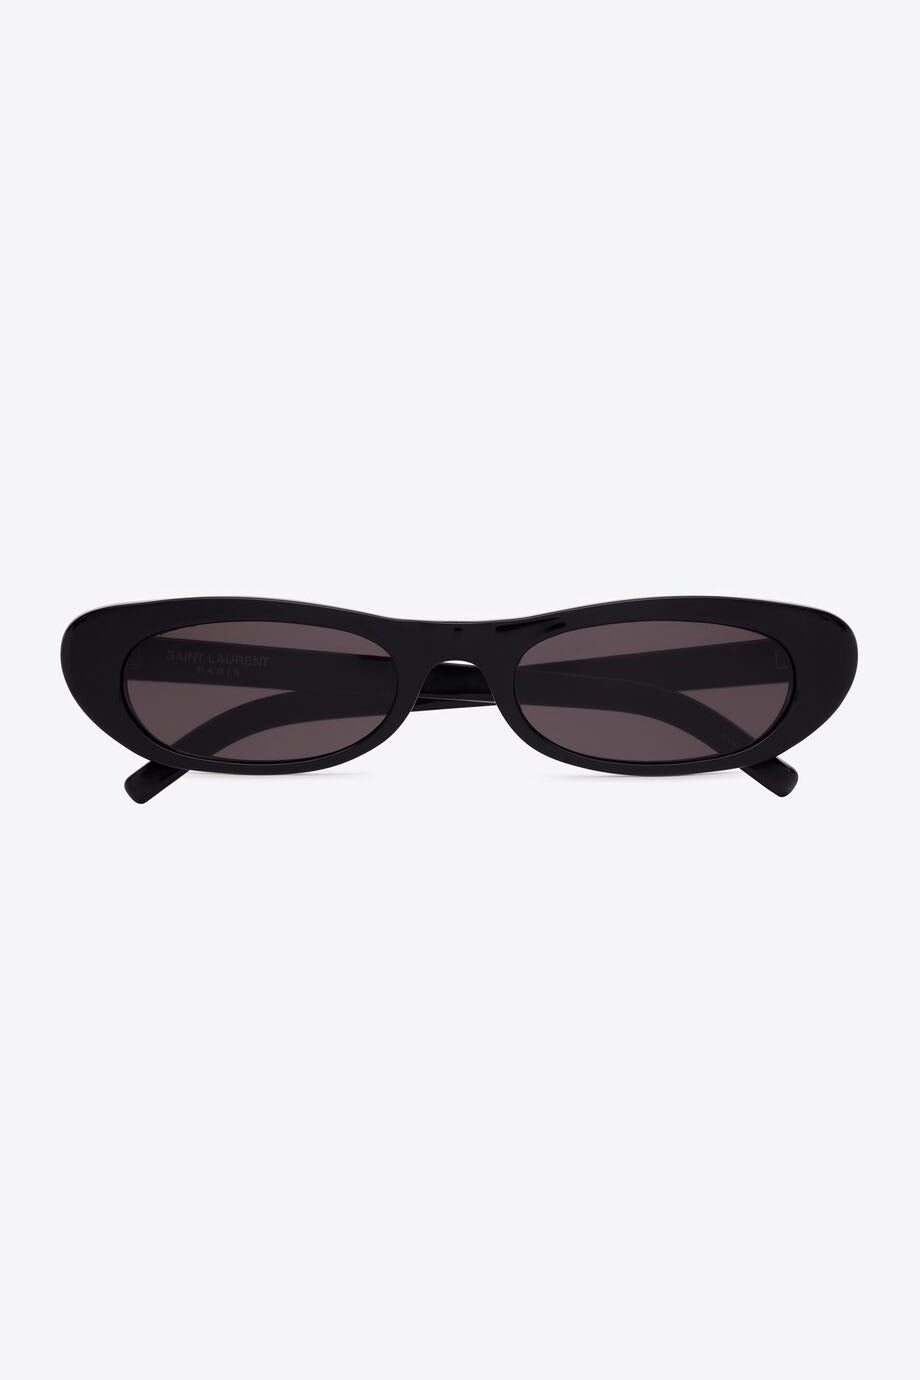 Saint Laurent Sunglasses Black SL557 001